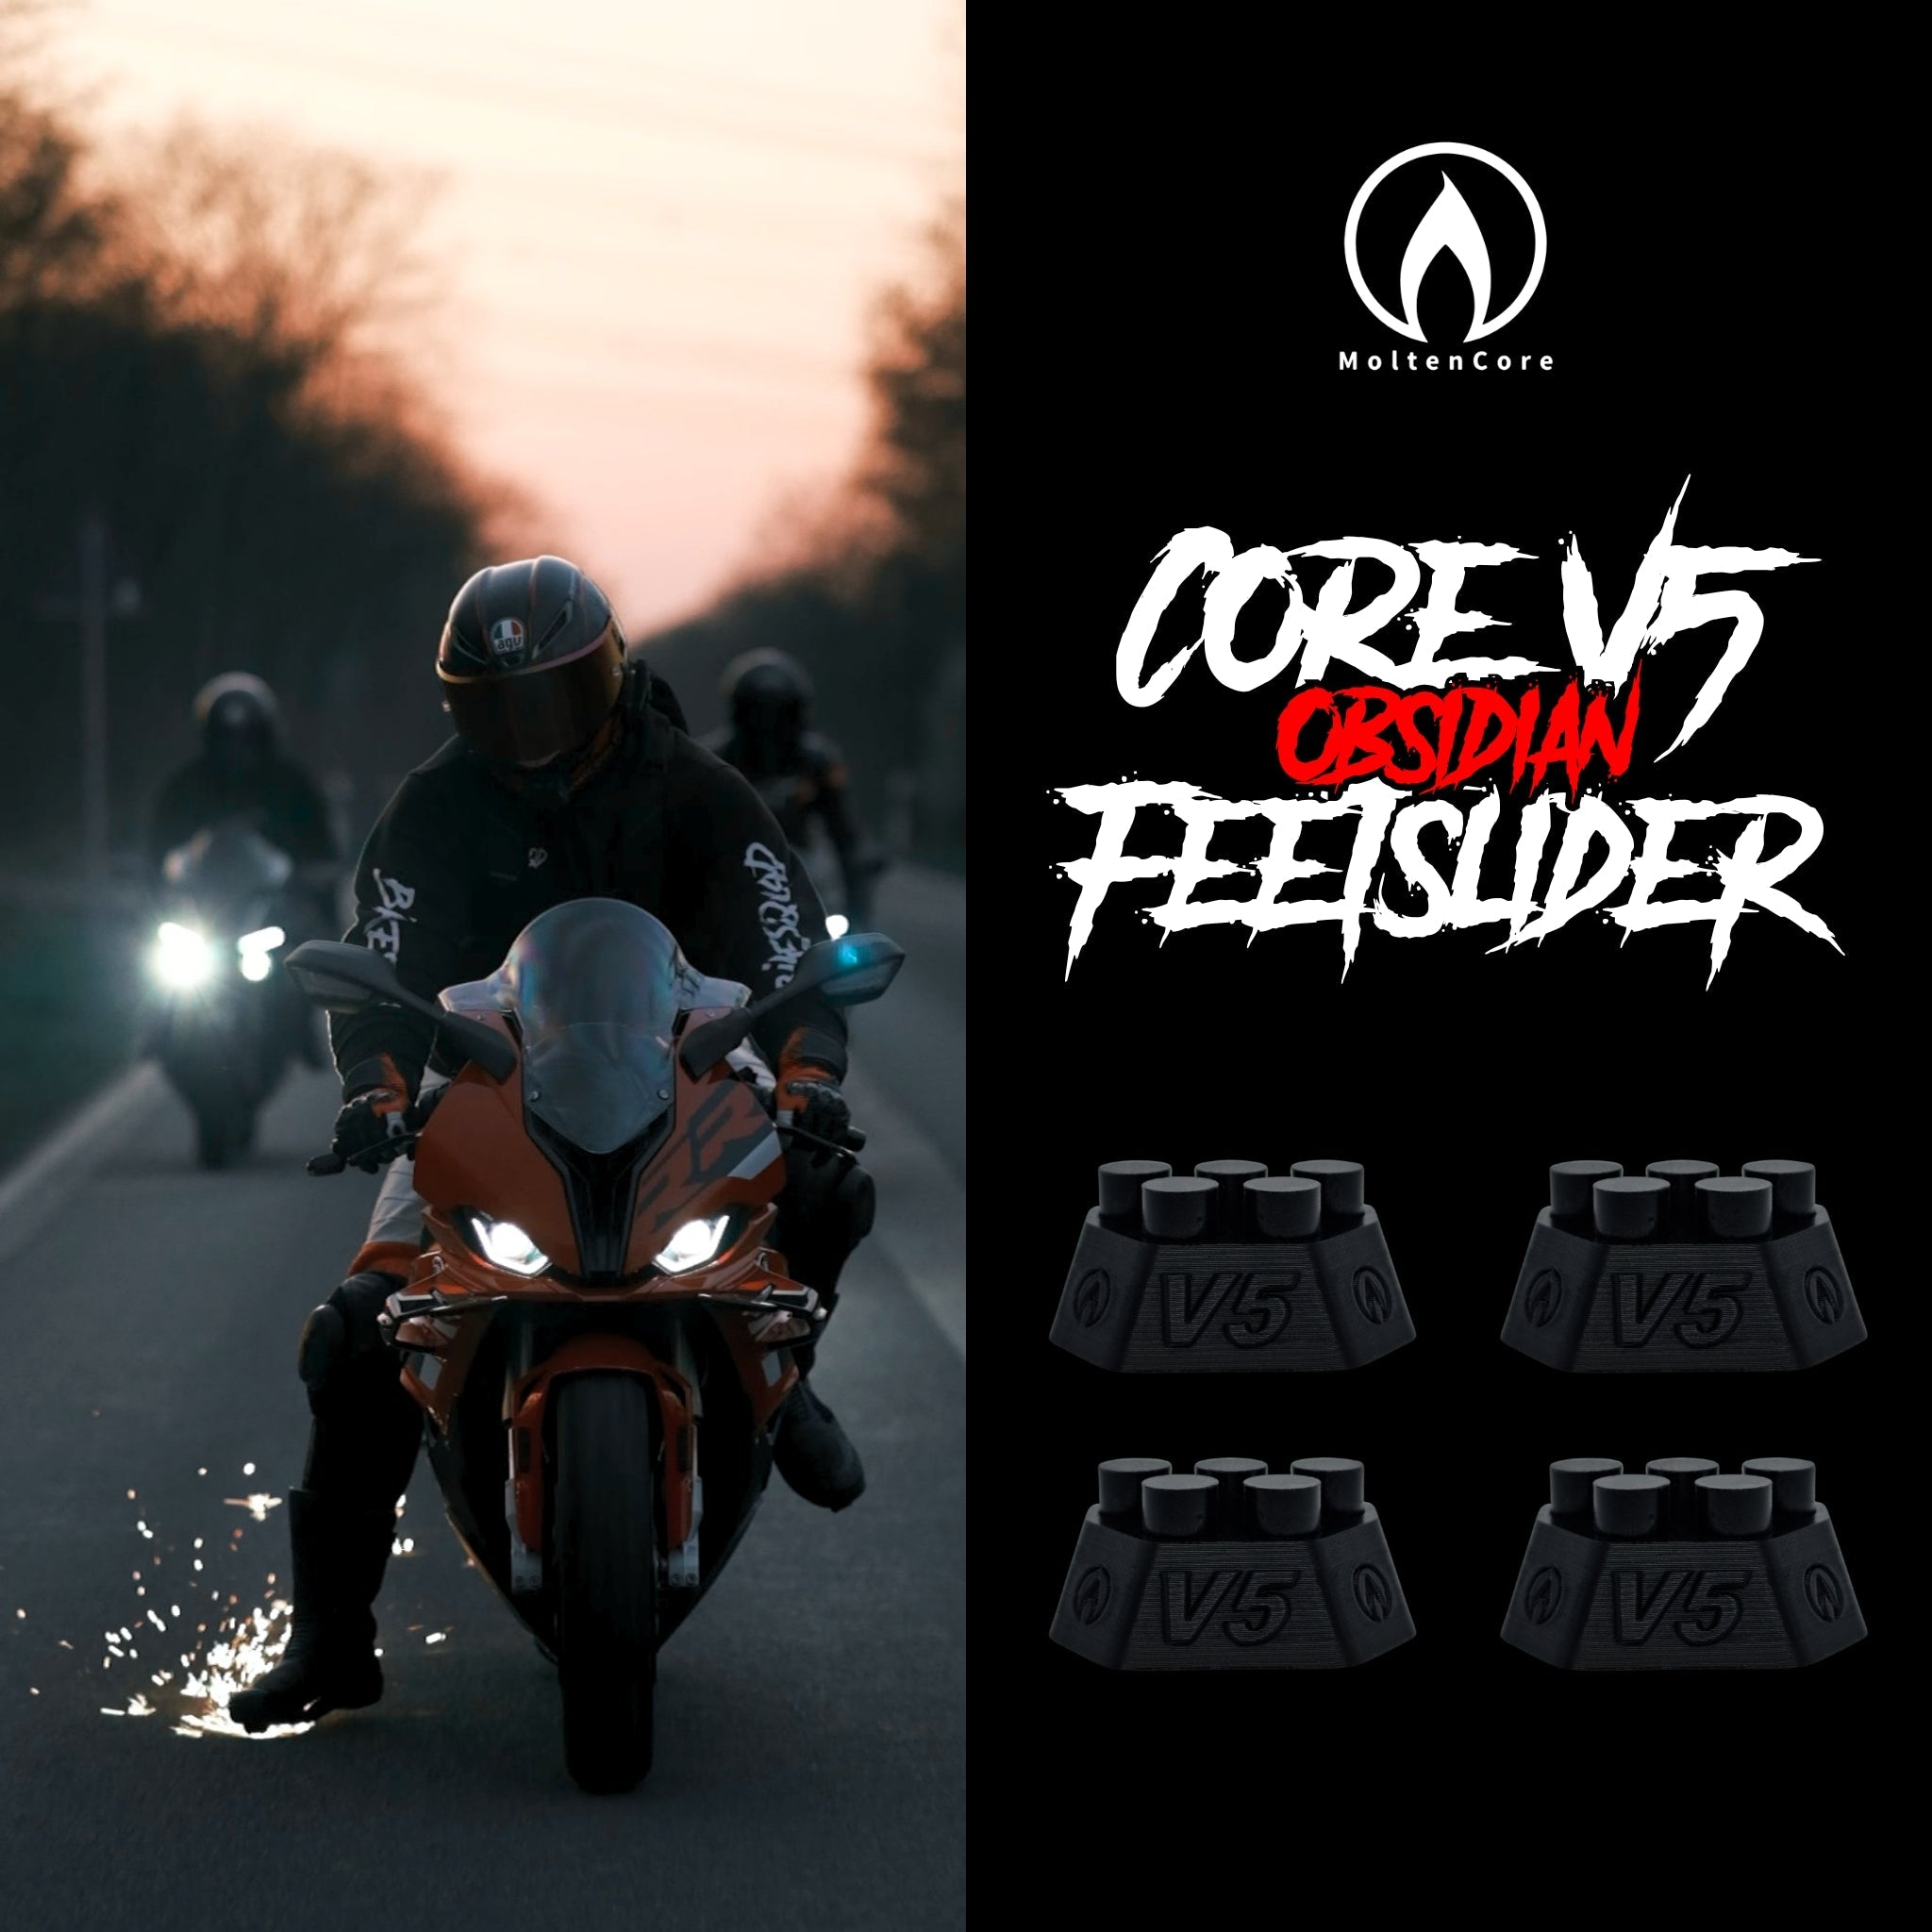 CoreV5 Obsidian Feetslider